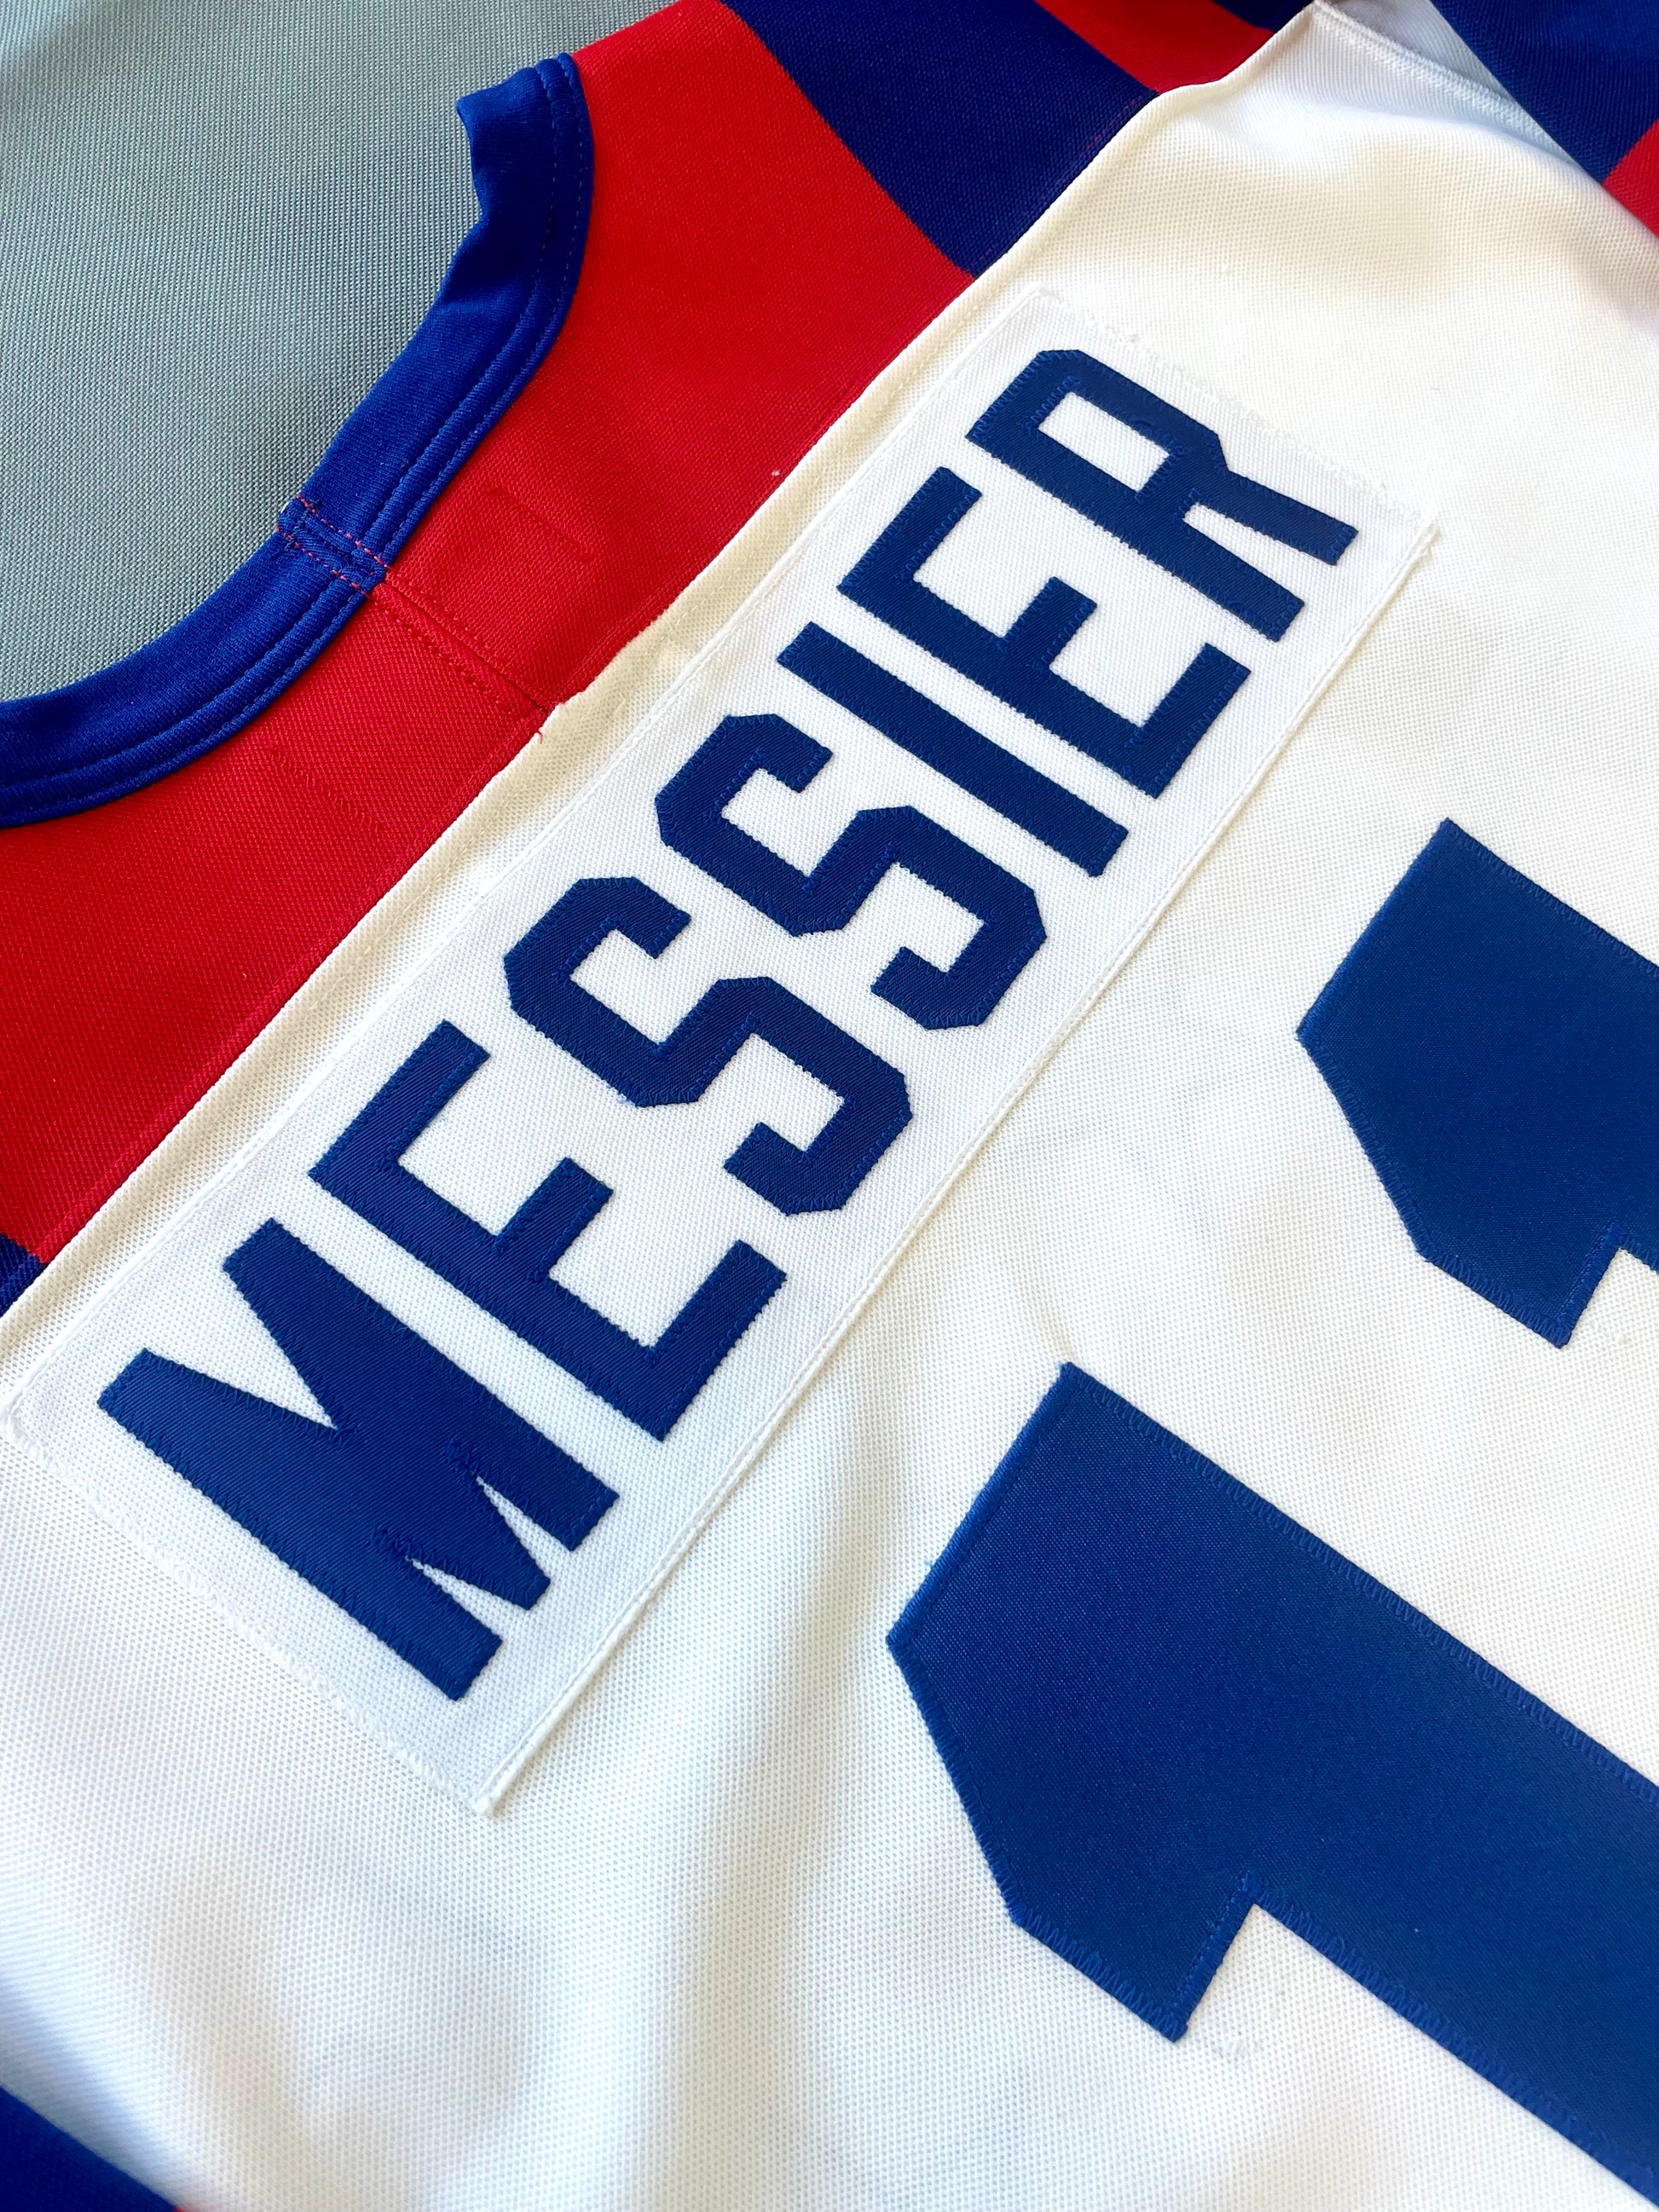 Mark Messier New York Rangers White 1992 All-Star Game Throwback CCM NHL  Jersey